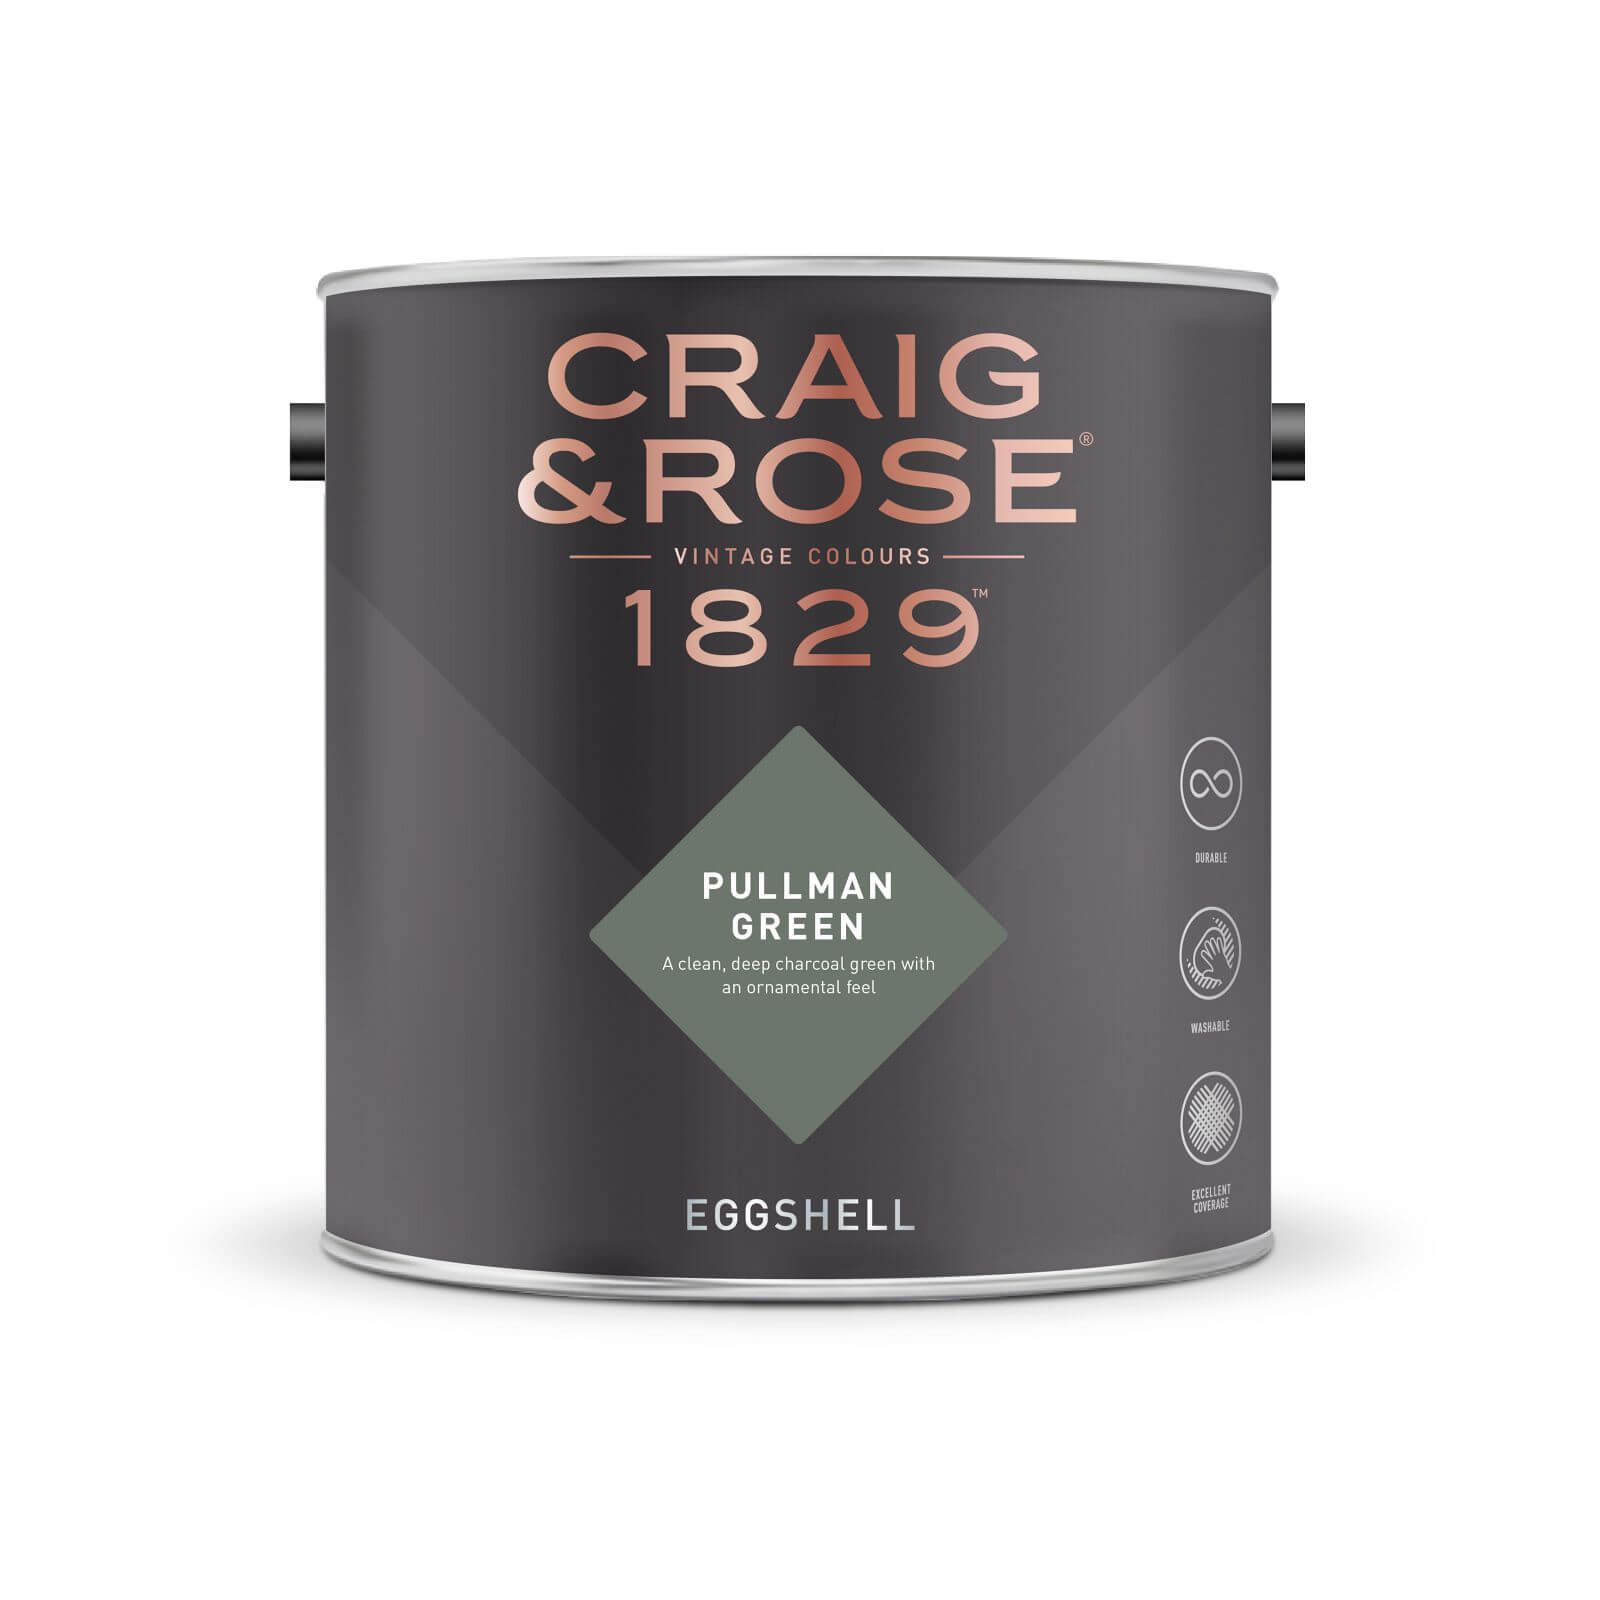 Craig & Rose 1829 Eggshell Paint Pullman Green - 2.5L